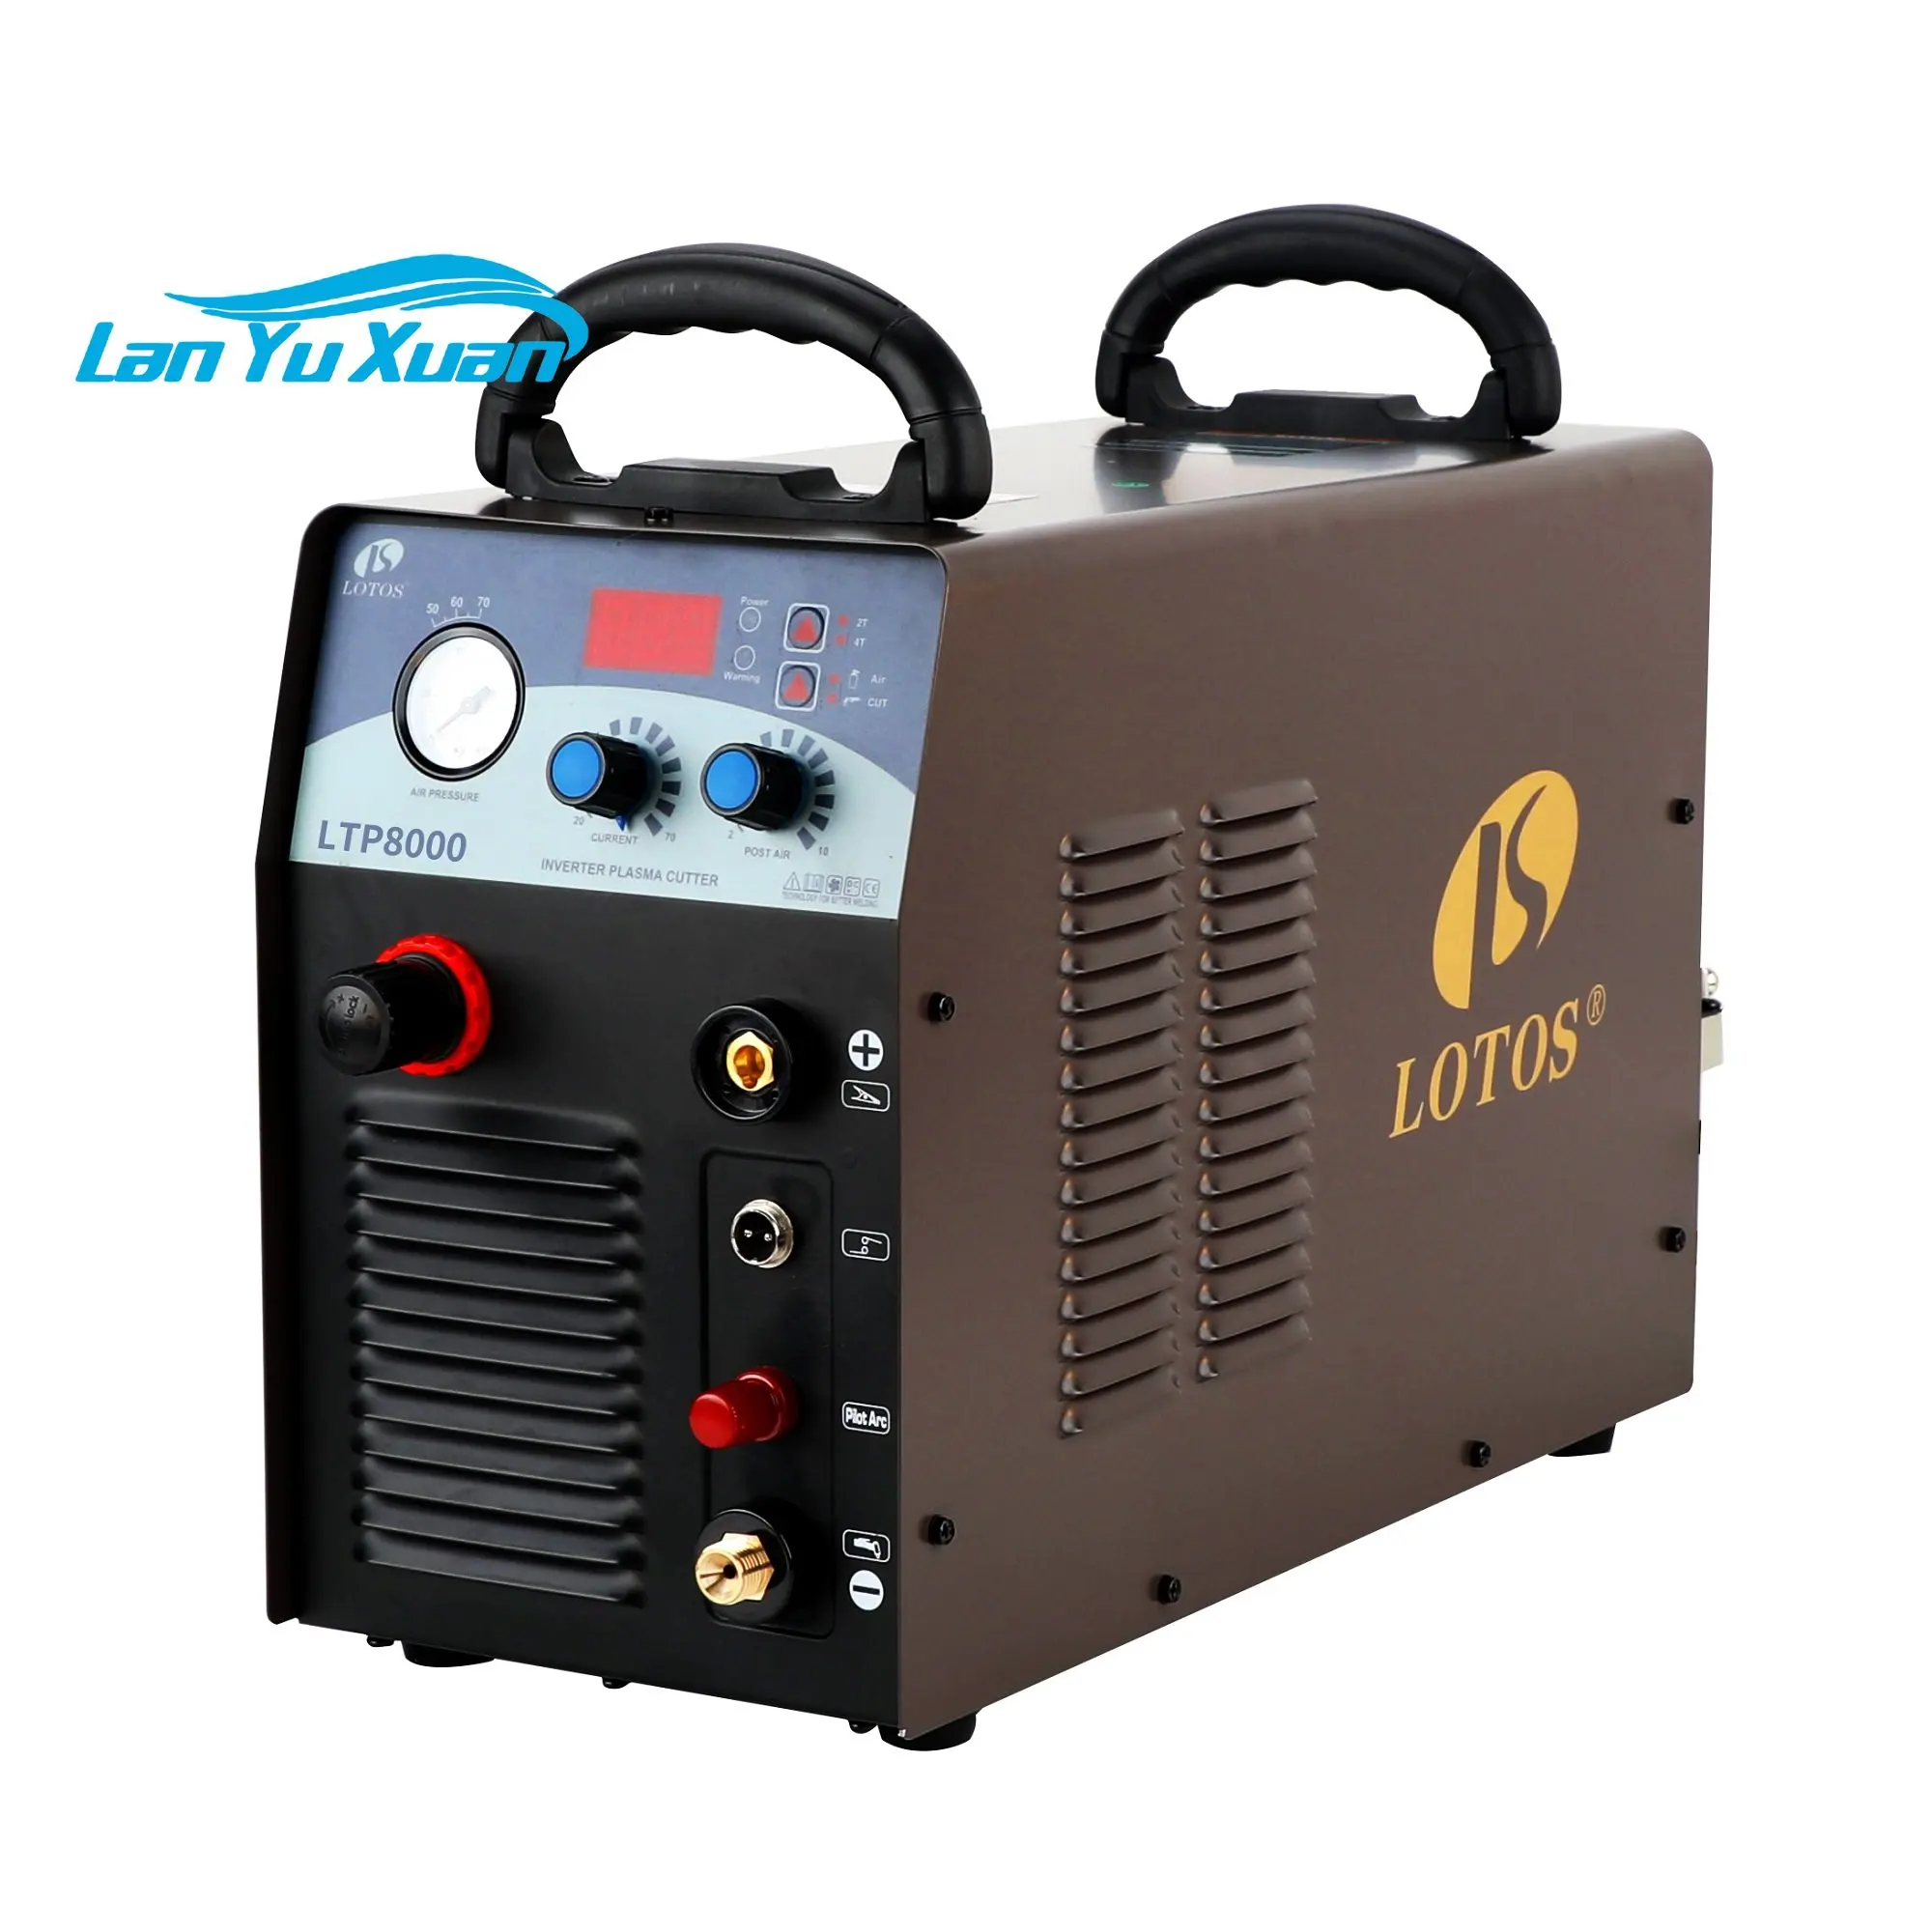 

Lotos LTP8000 plasma cutter 40a portable cut 80 for metal cutter 220v-240v plasma cutting machine cnc factory price